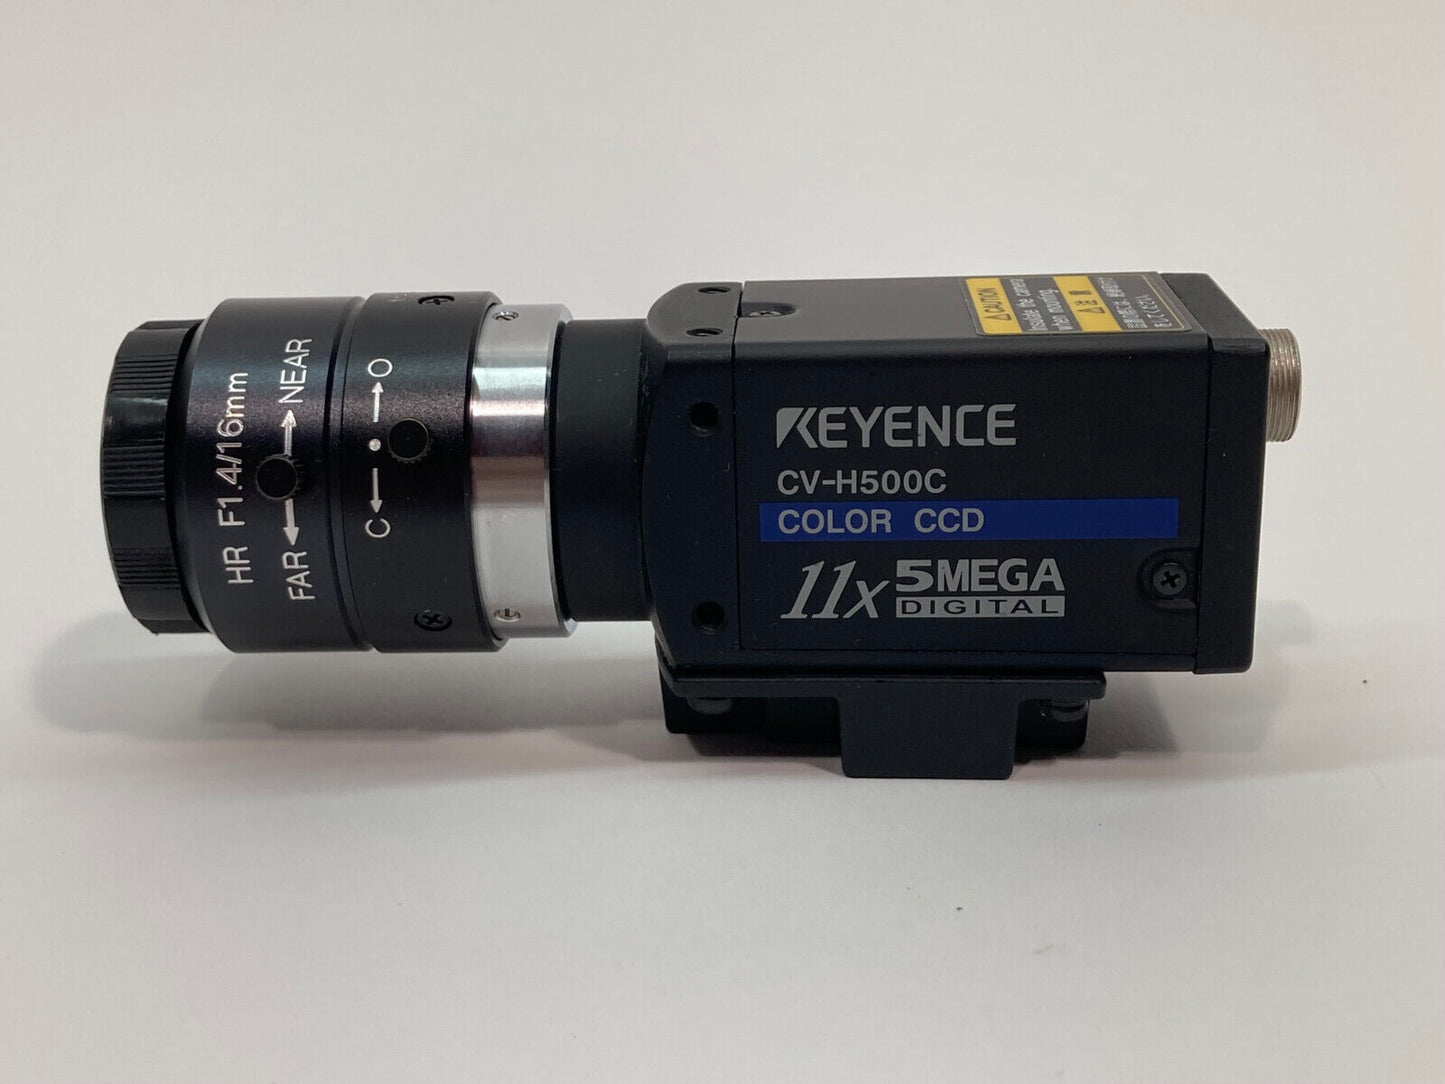 Keyence CV-H500C Color CCD 11x 5 MEGA Digital Camera